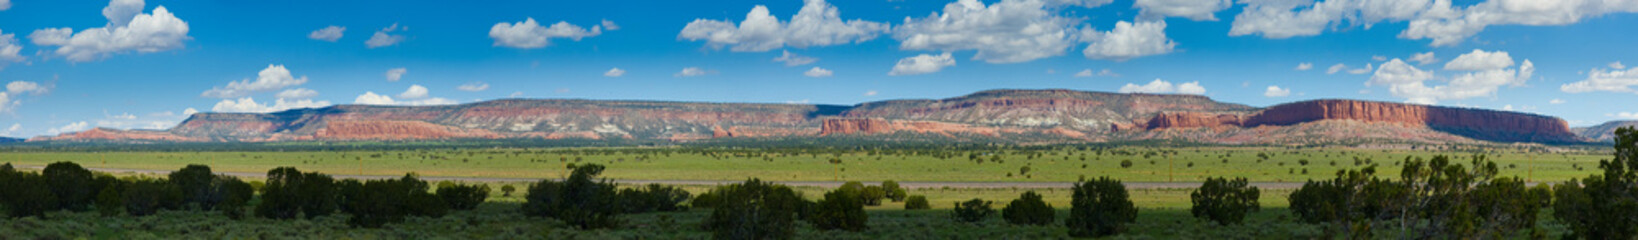 Rode bergen van Arizona - panorama